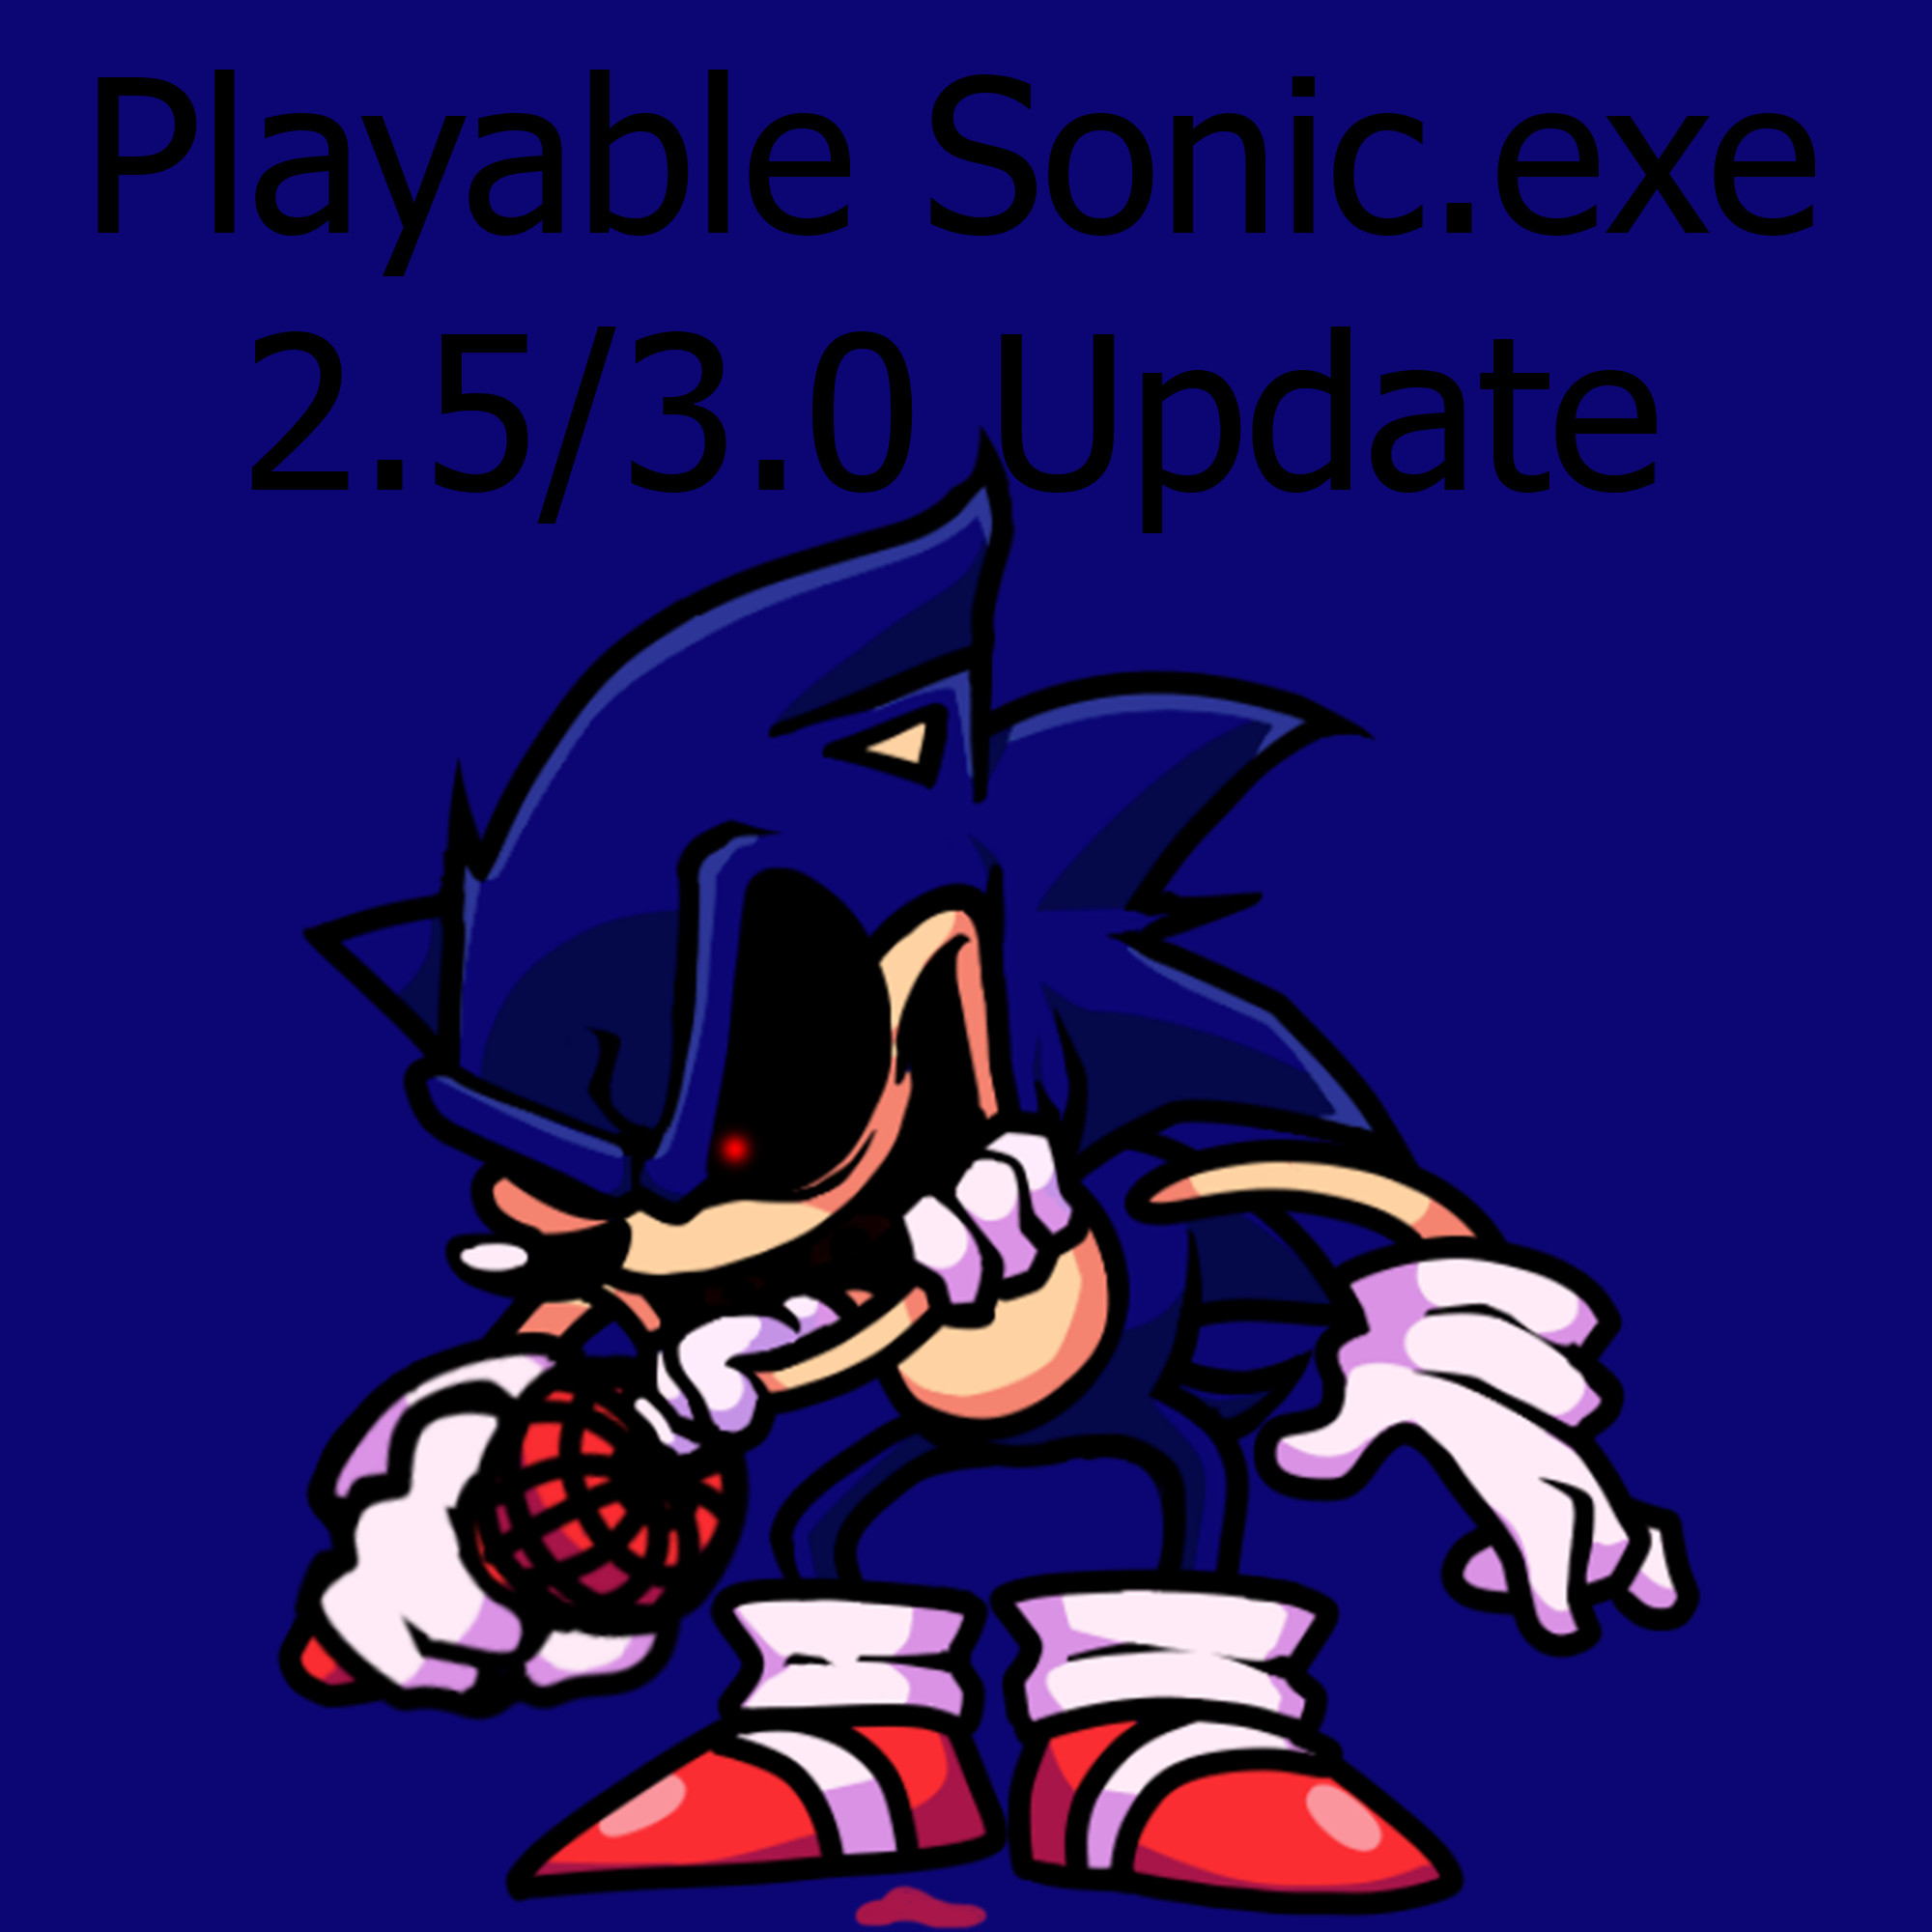 Sonic.exe v2 PE Port [Friday Night Funkin'] [Mods]